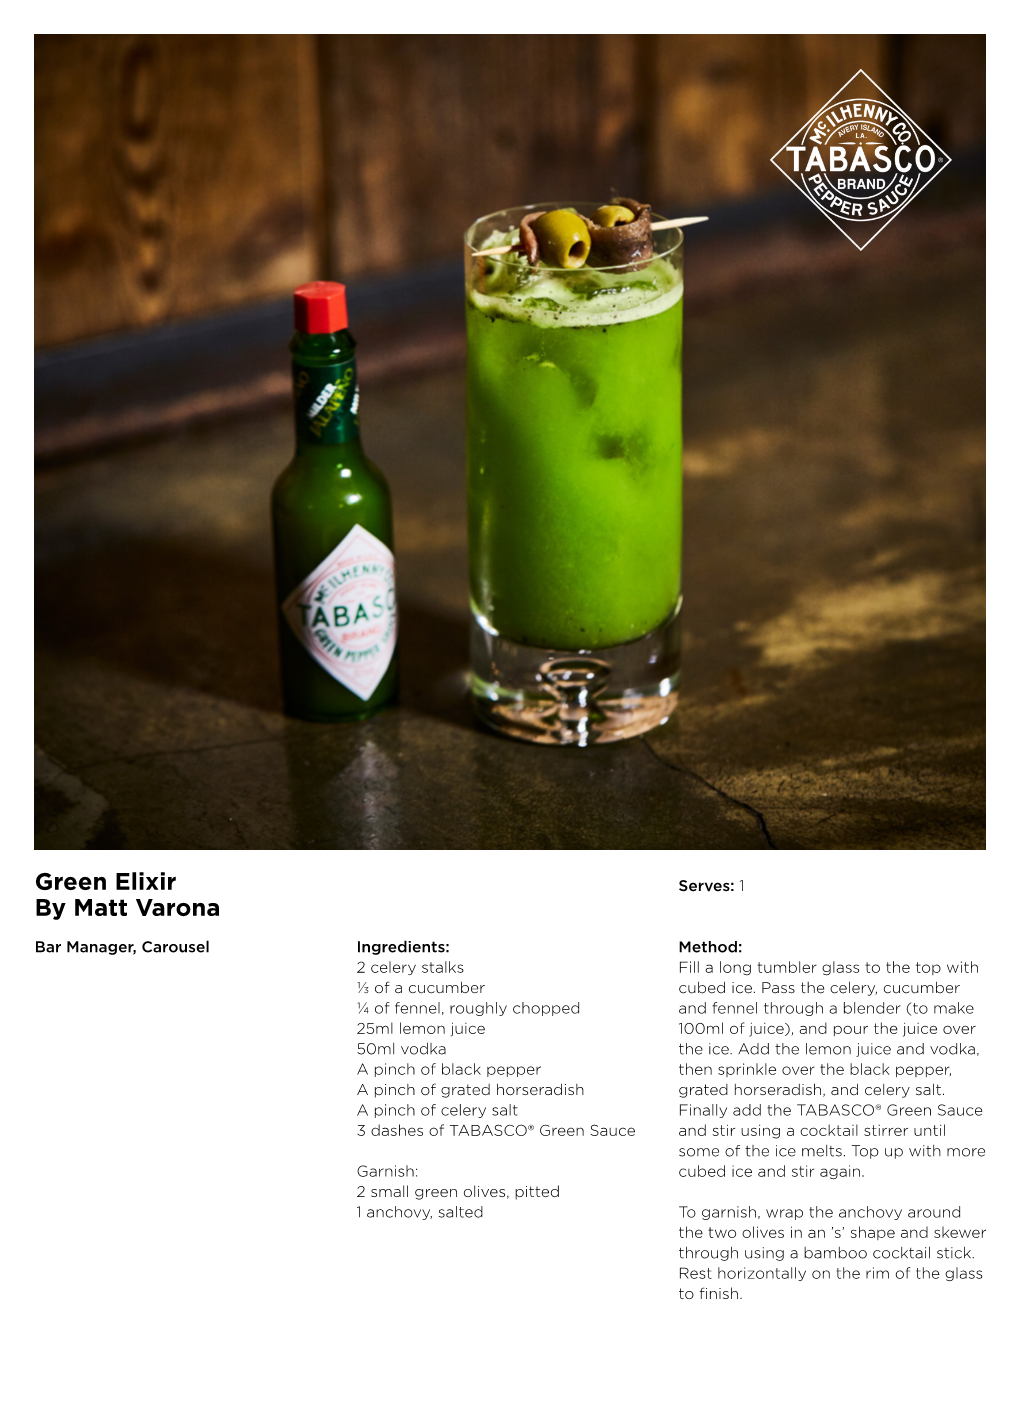 Green Elixir Serves: 1 by Matt Varona